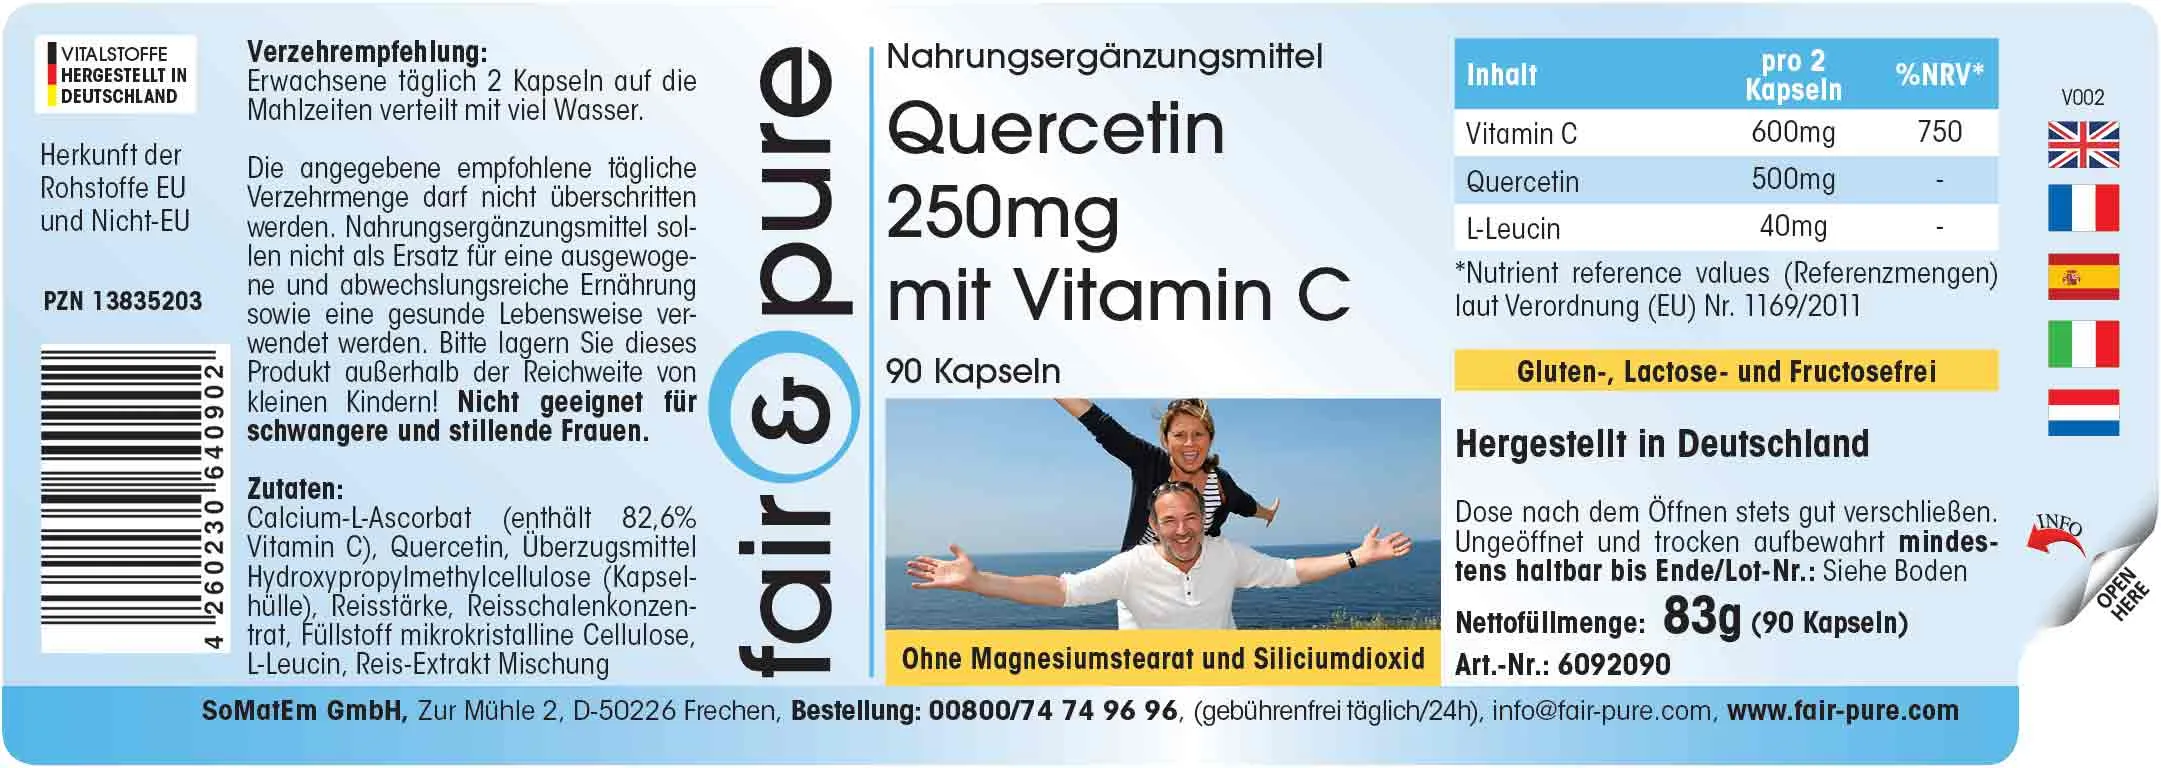 Quercetina 250mg + Vitamina C